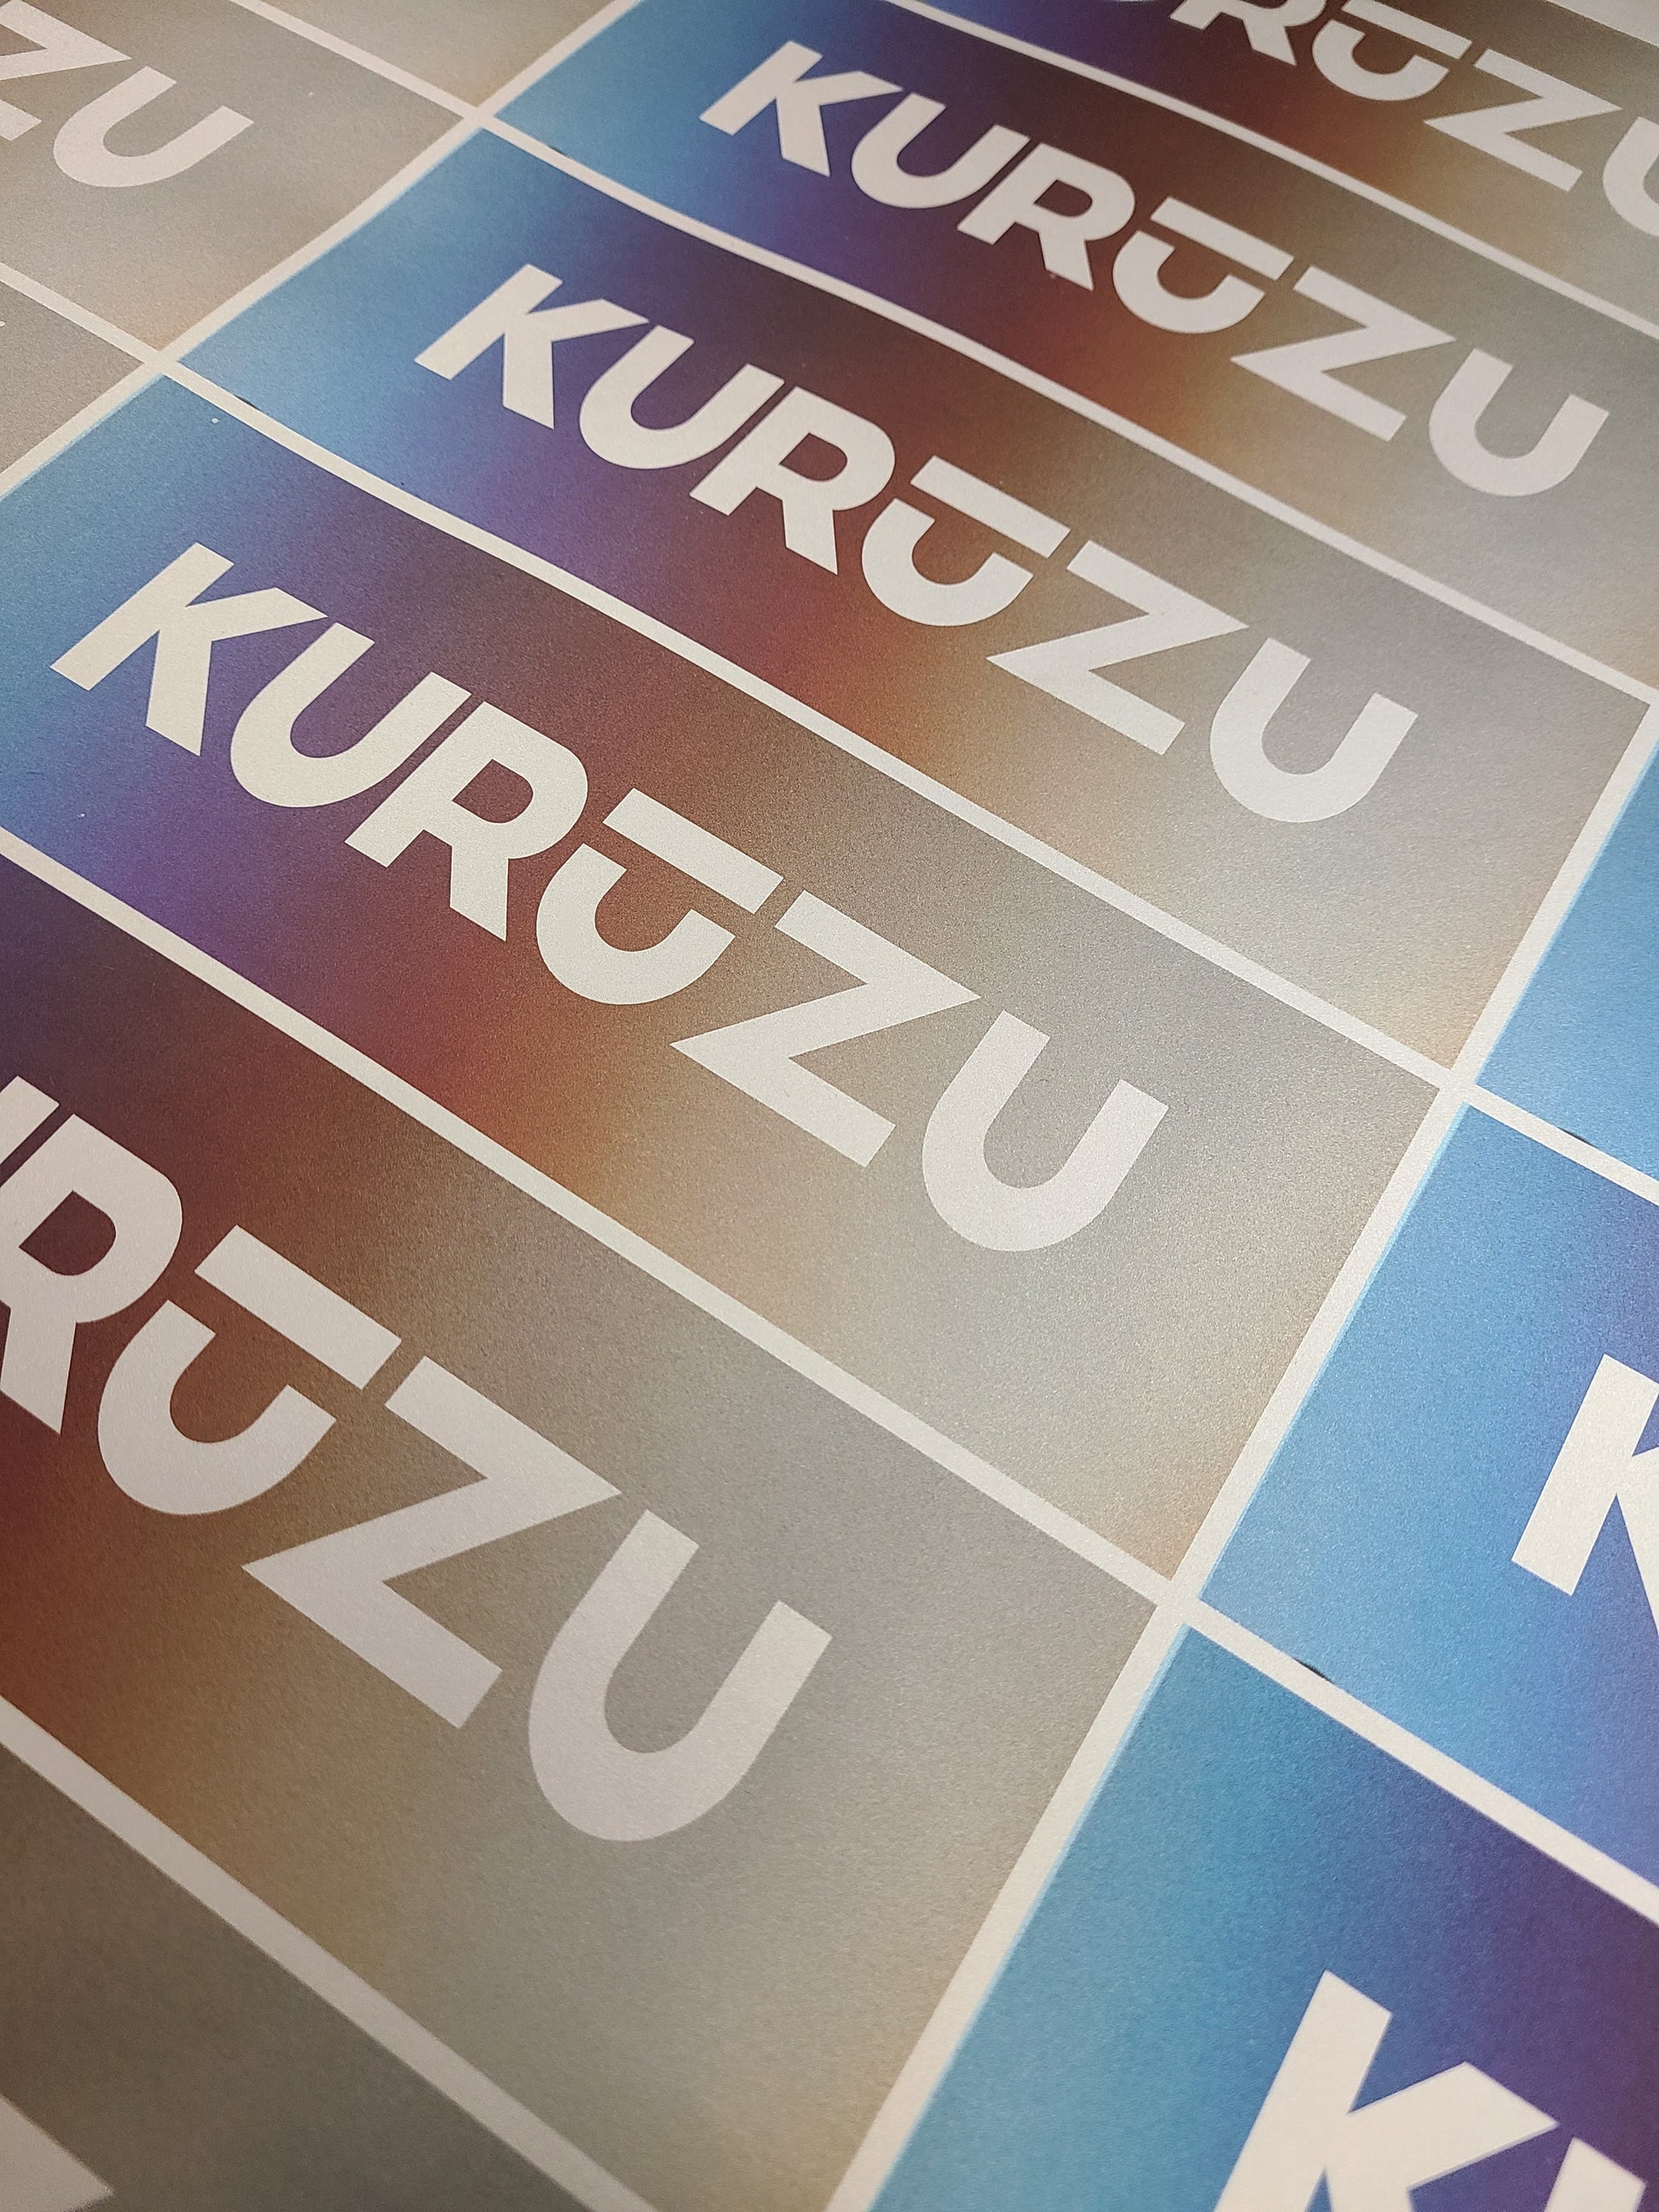 custom printed slap bumper stickers for car teams and brands. jdm stickers in matte finish made for kuruzu